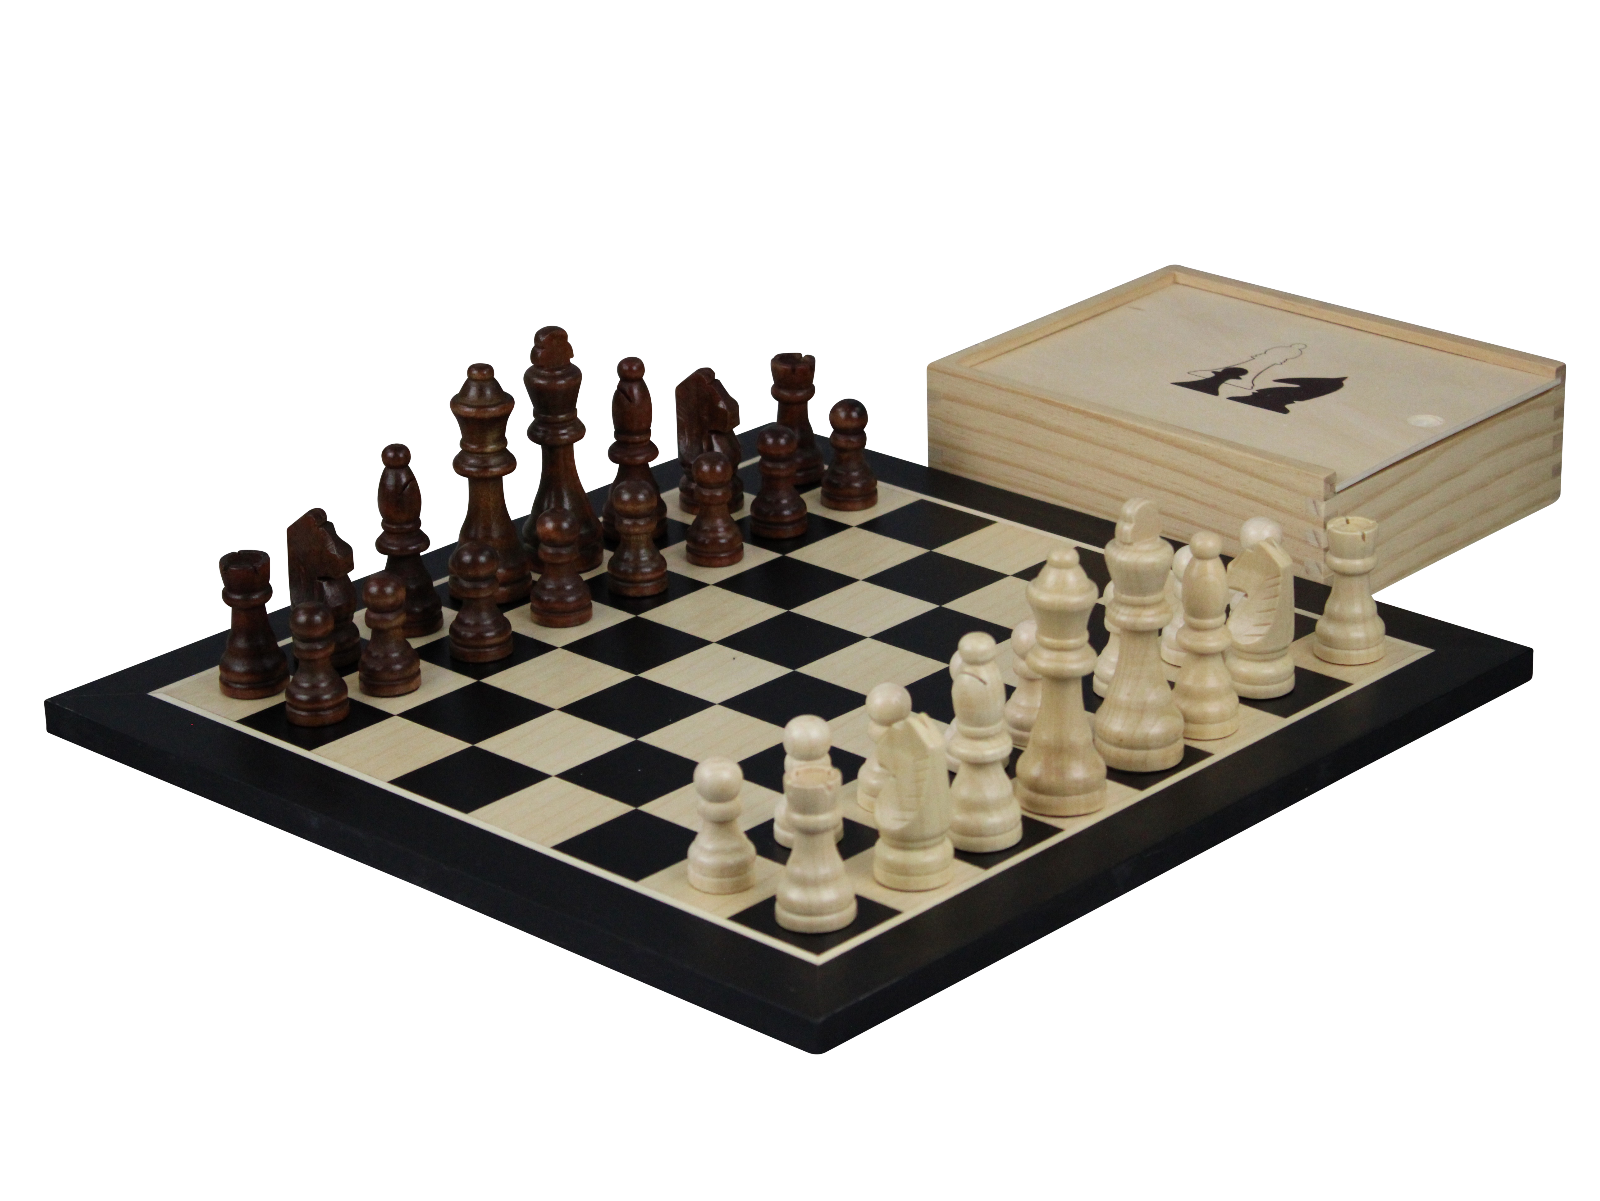 Black And White Chess Set